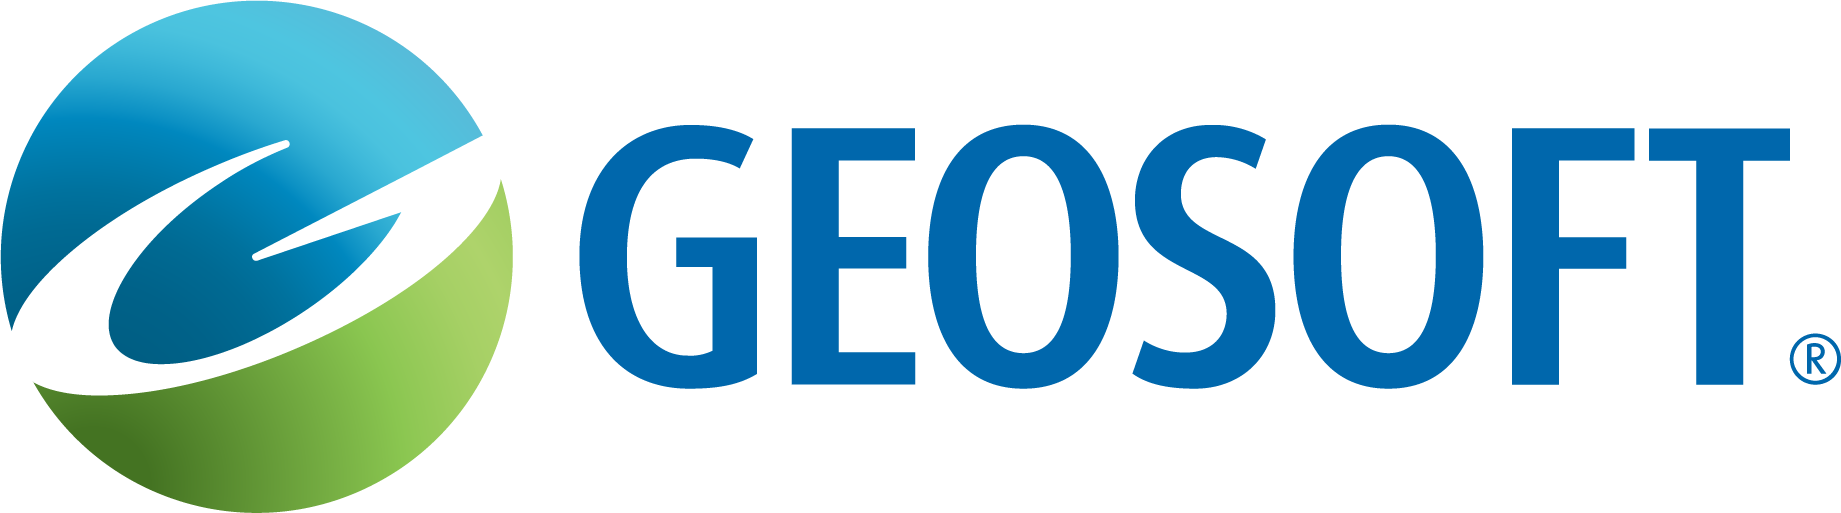 Geosoft logo